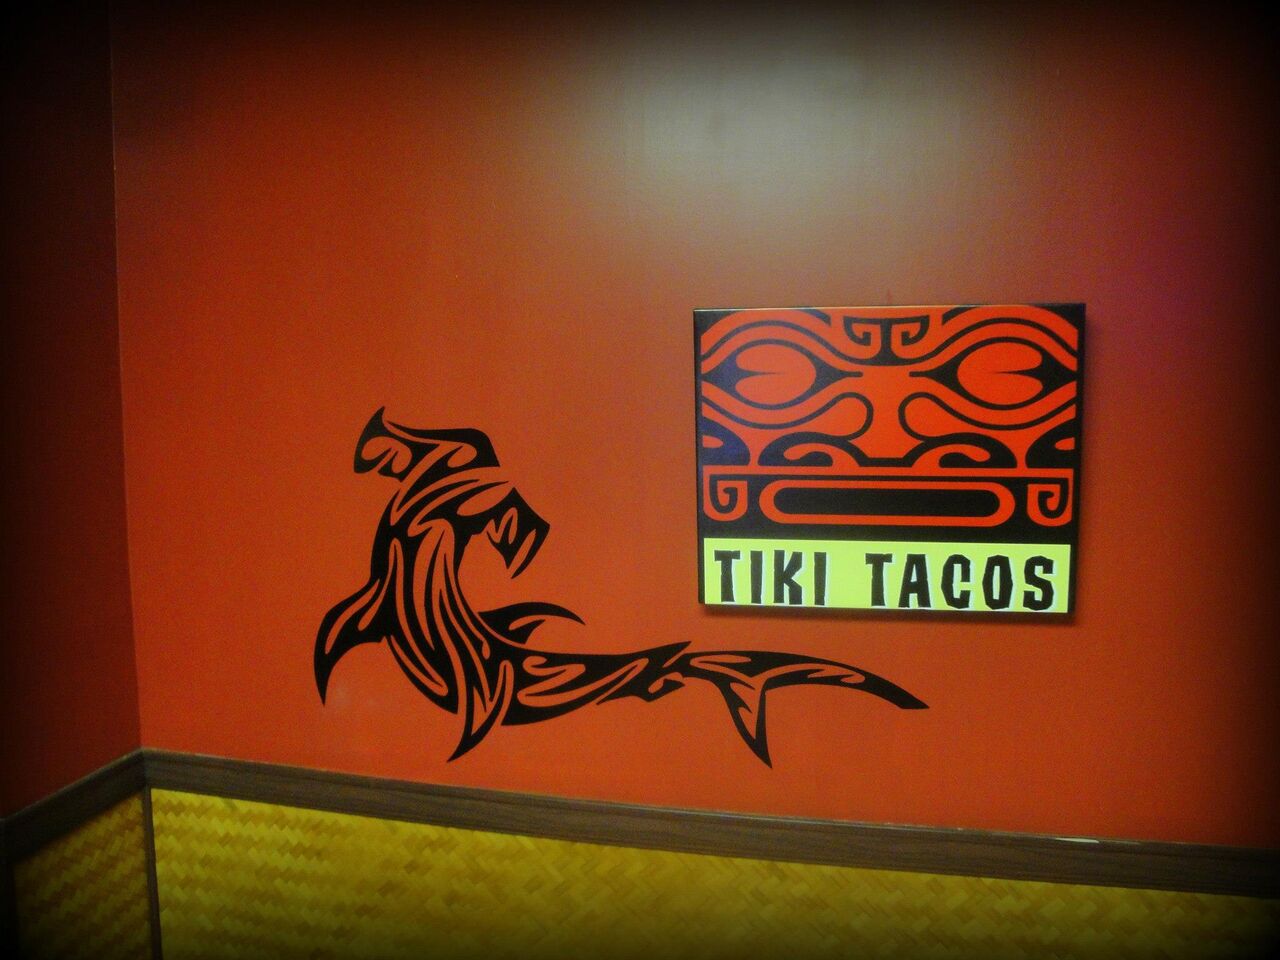 A photo of Tiki Tacos